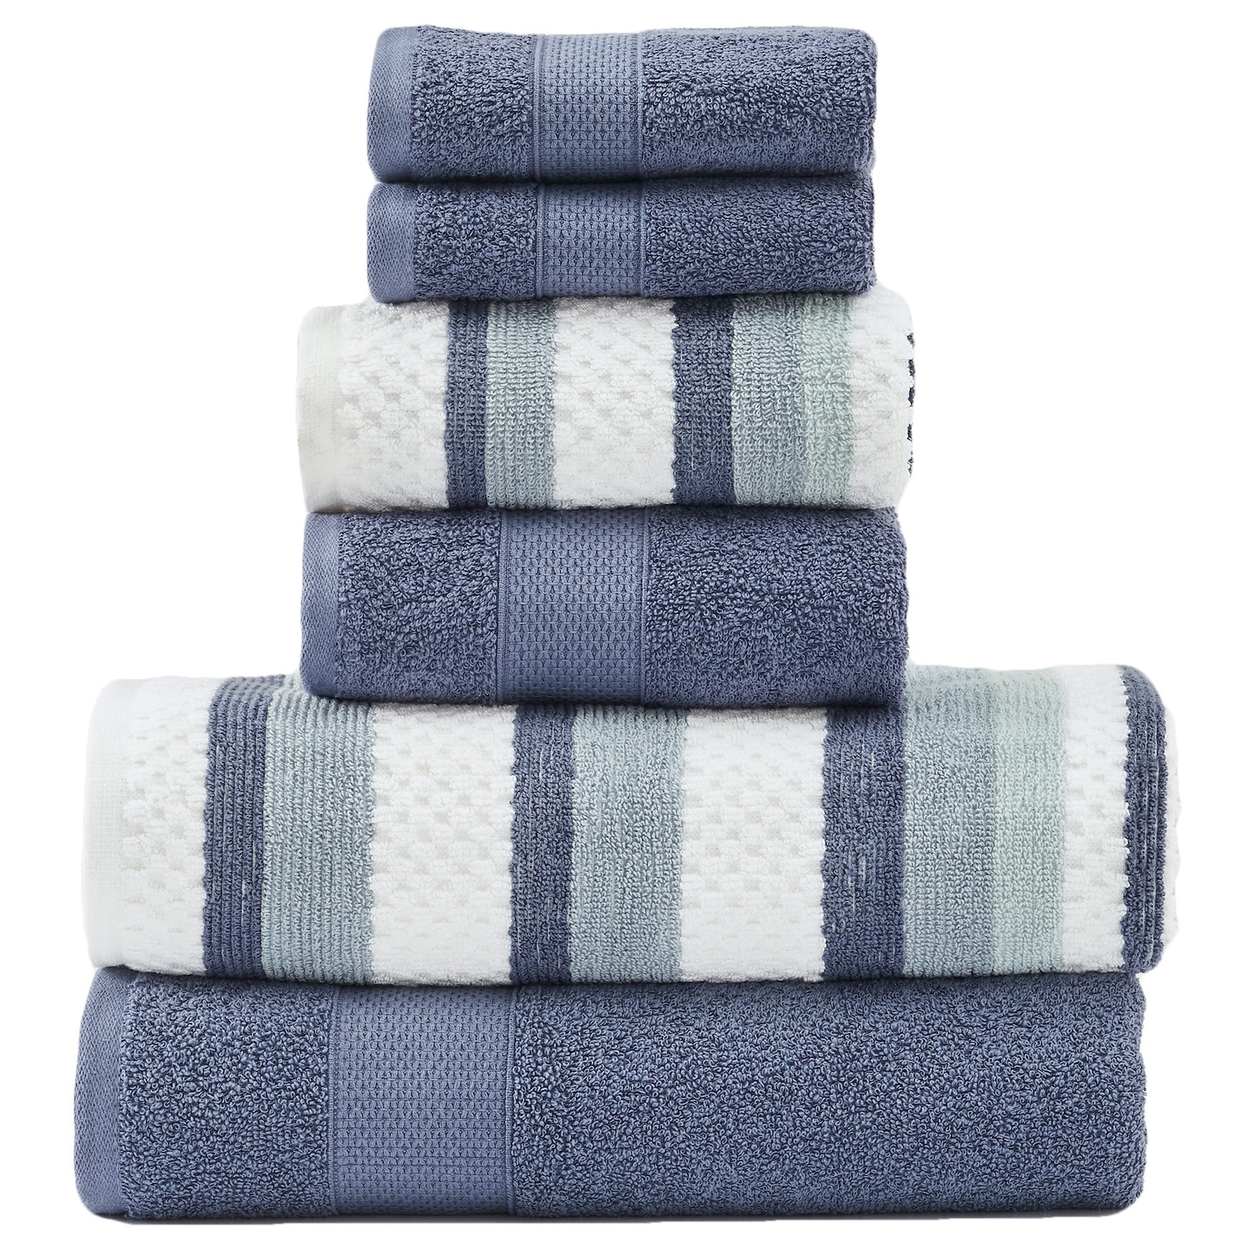 Nyx 6pc Soft Cotton Towel Set, Striped, White, Blue By The Urban Port- Saltoro Sherpi